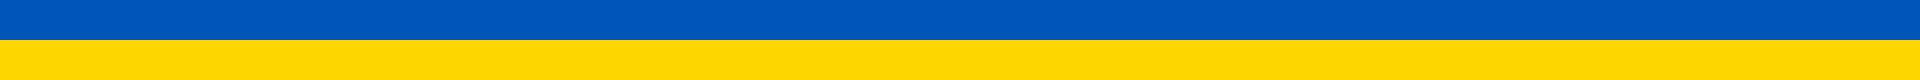 Ukraine flag colours (blue and gold)